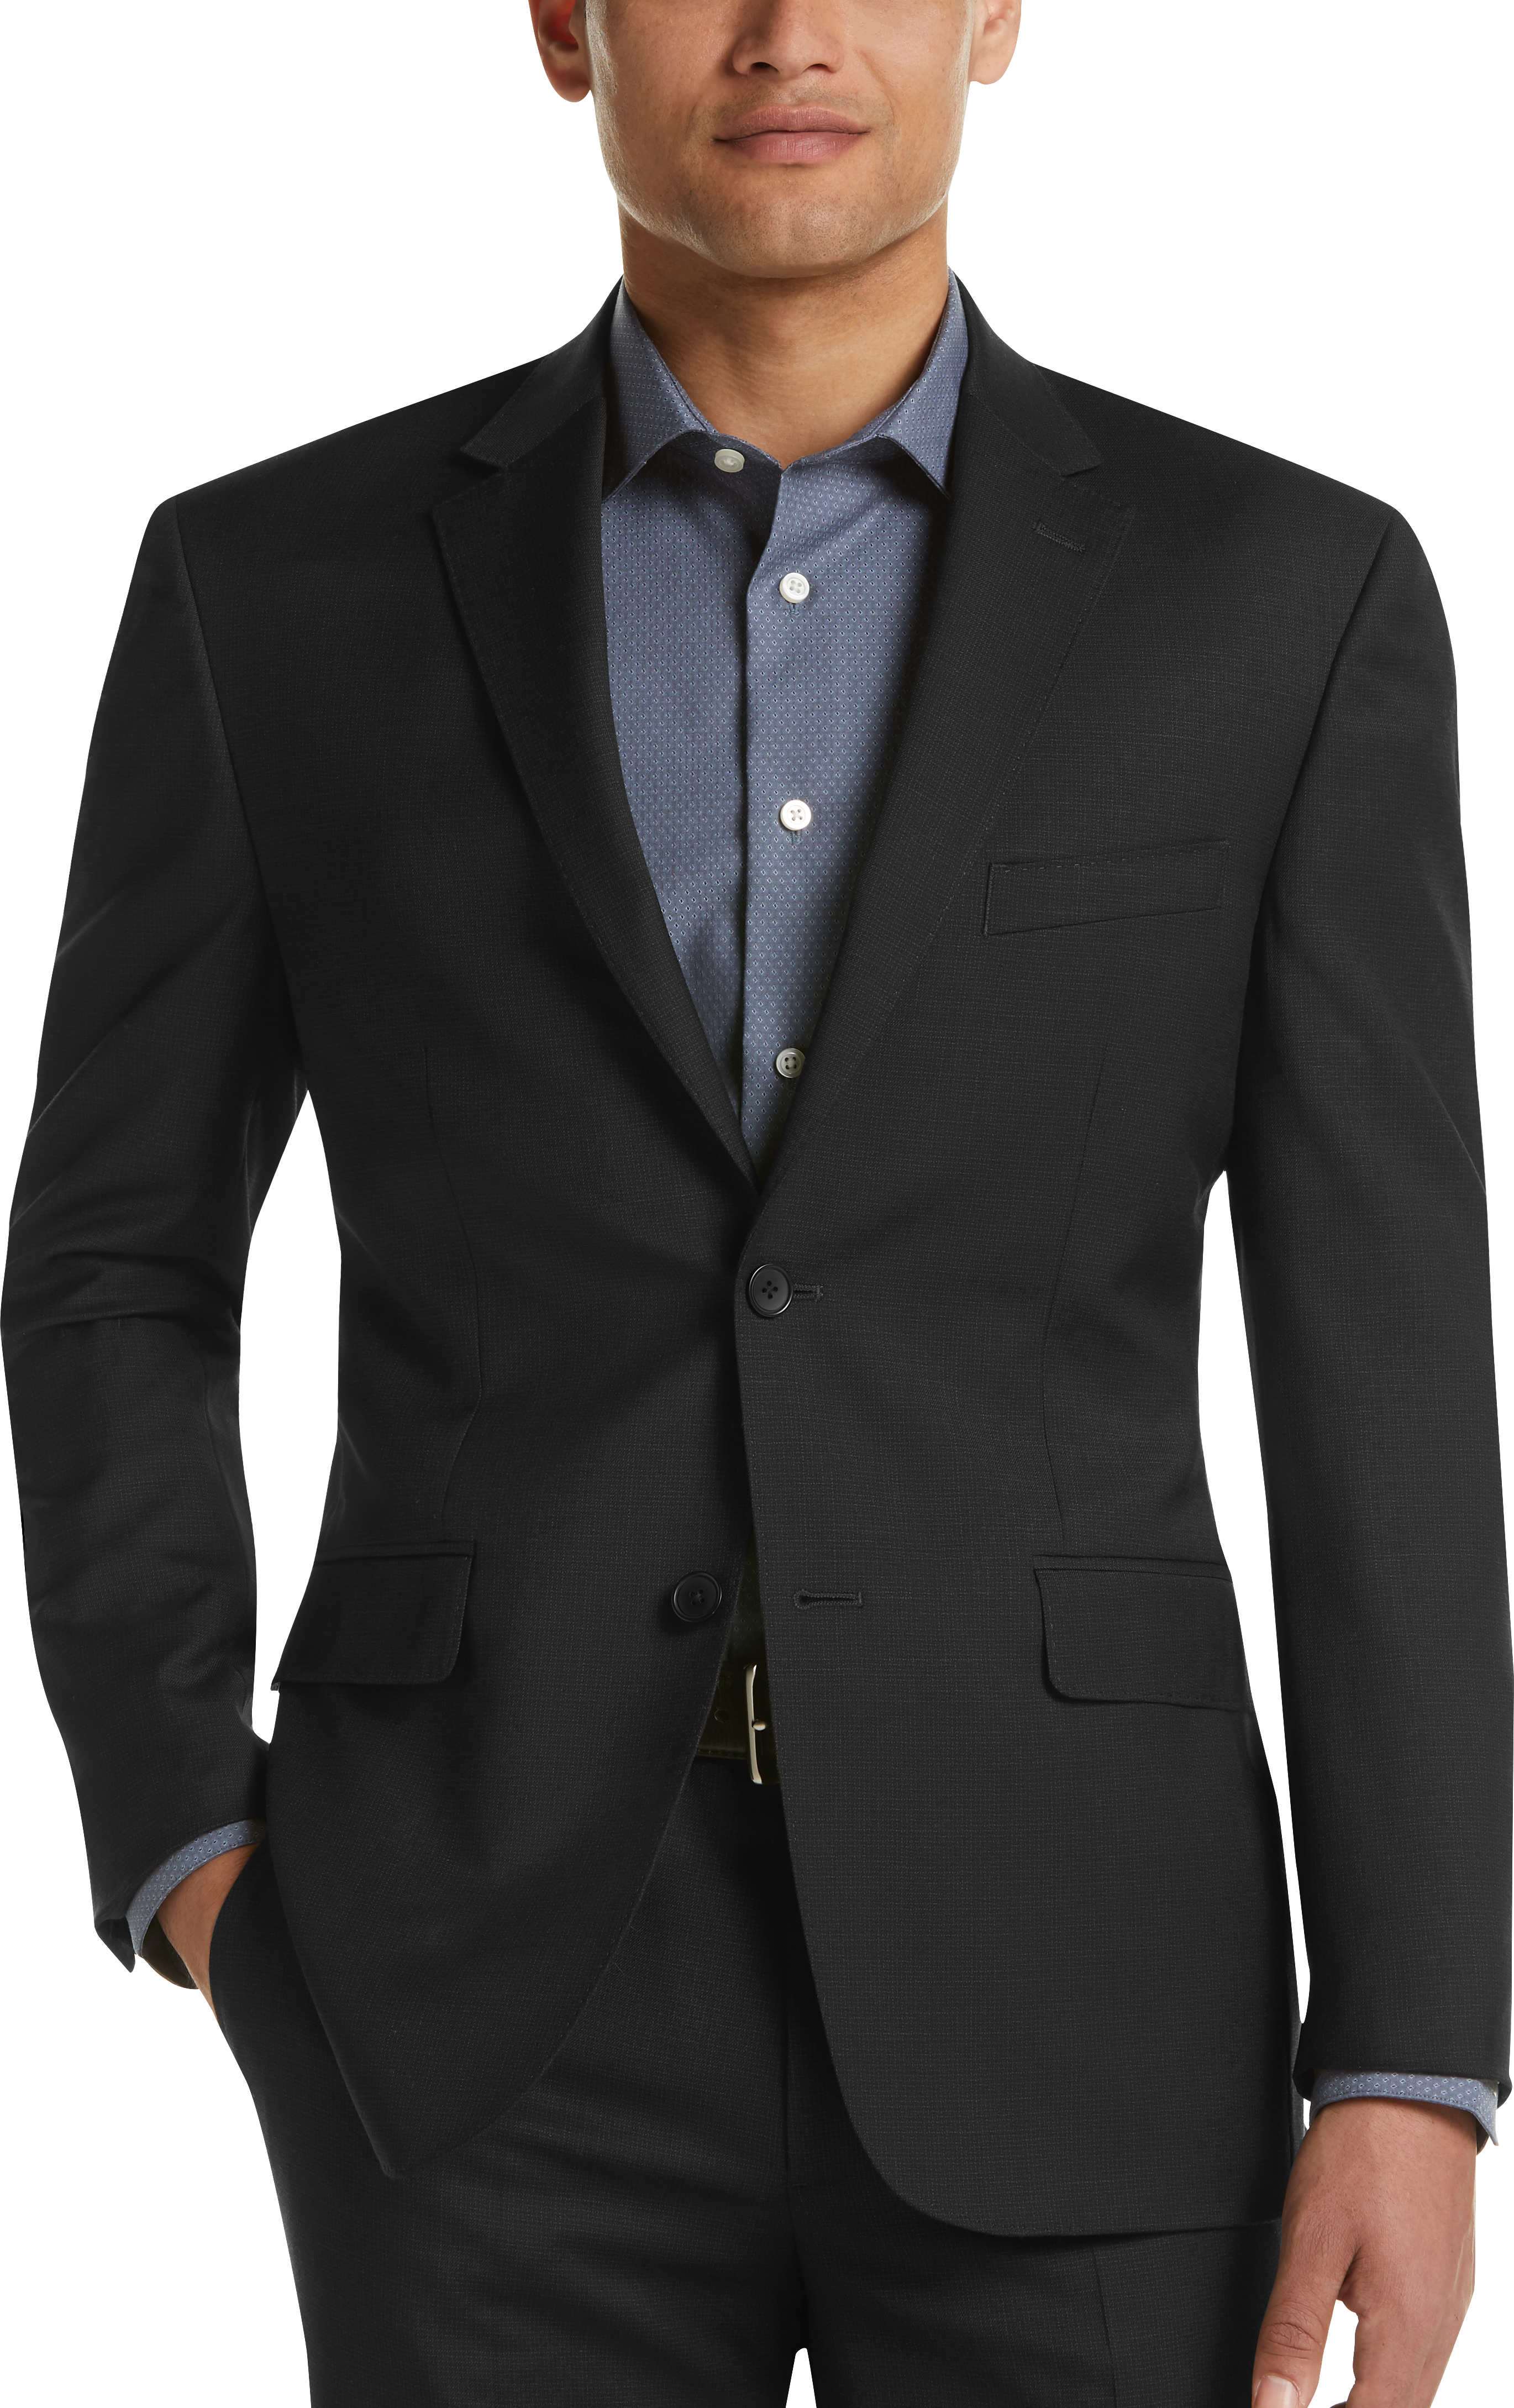 Awearness Kenneth Cole Black Mini Check Slim Fit Suit - Men's Suits ...